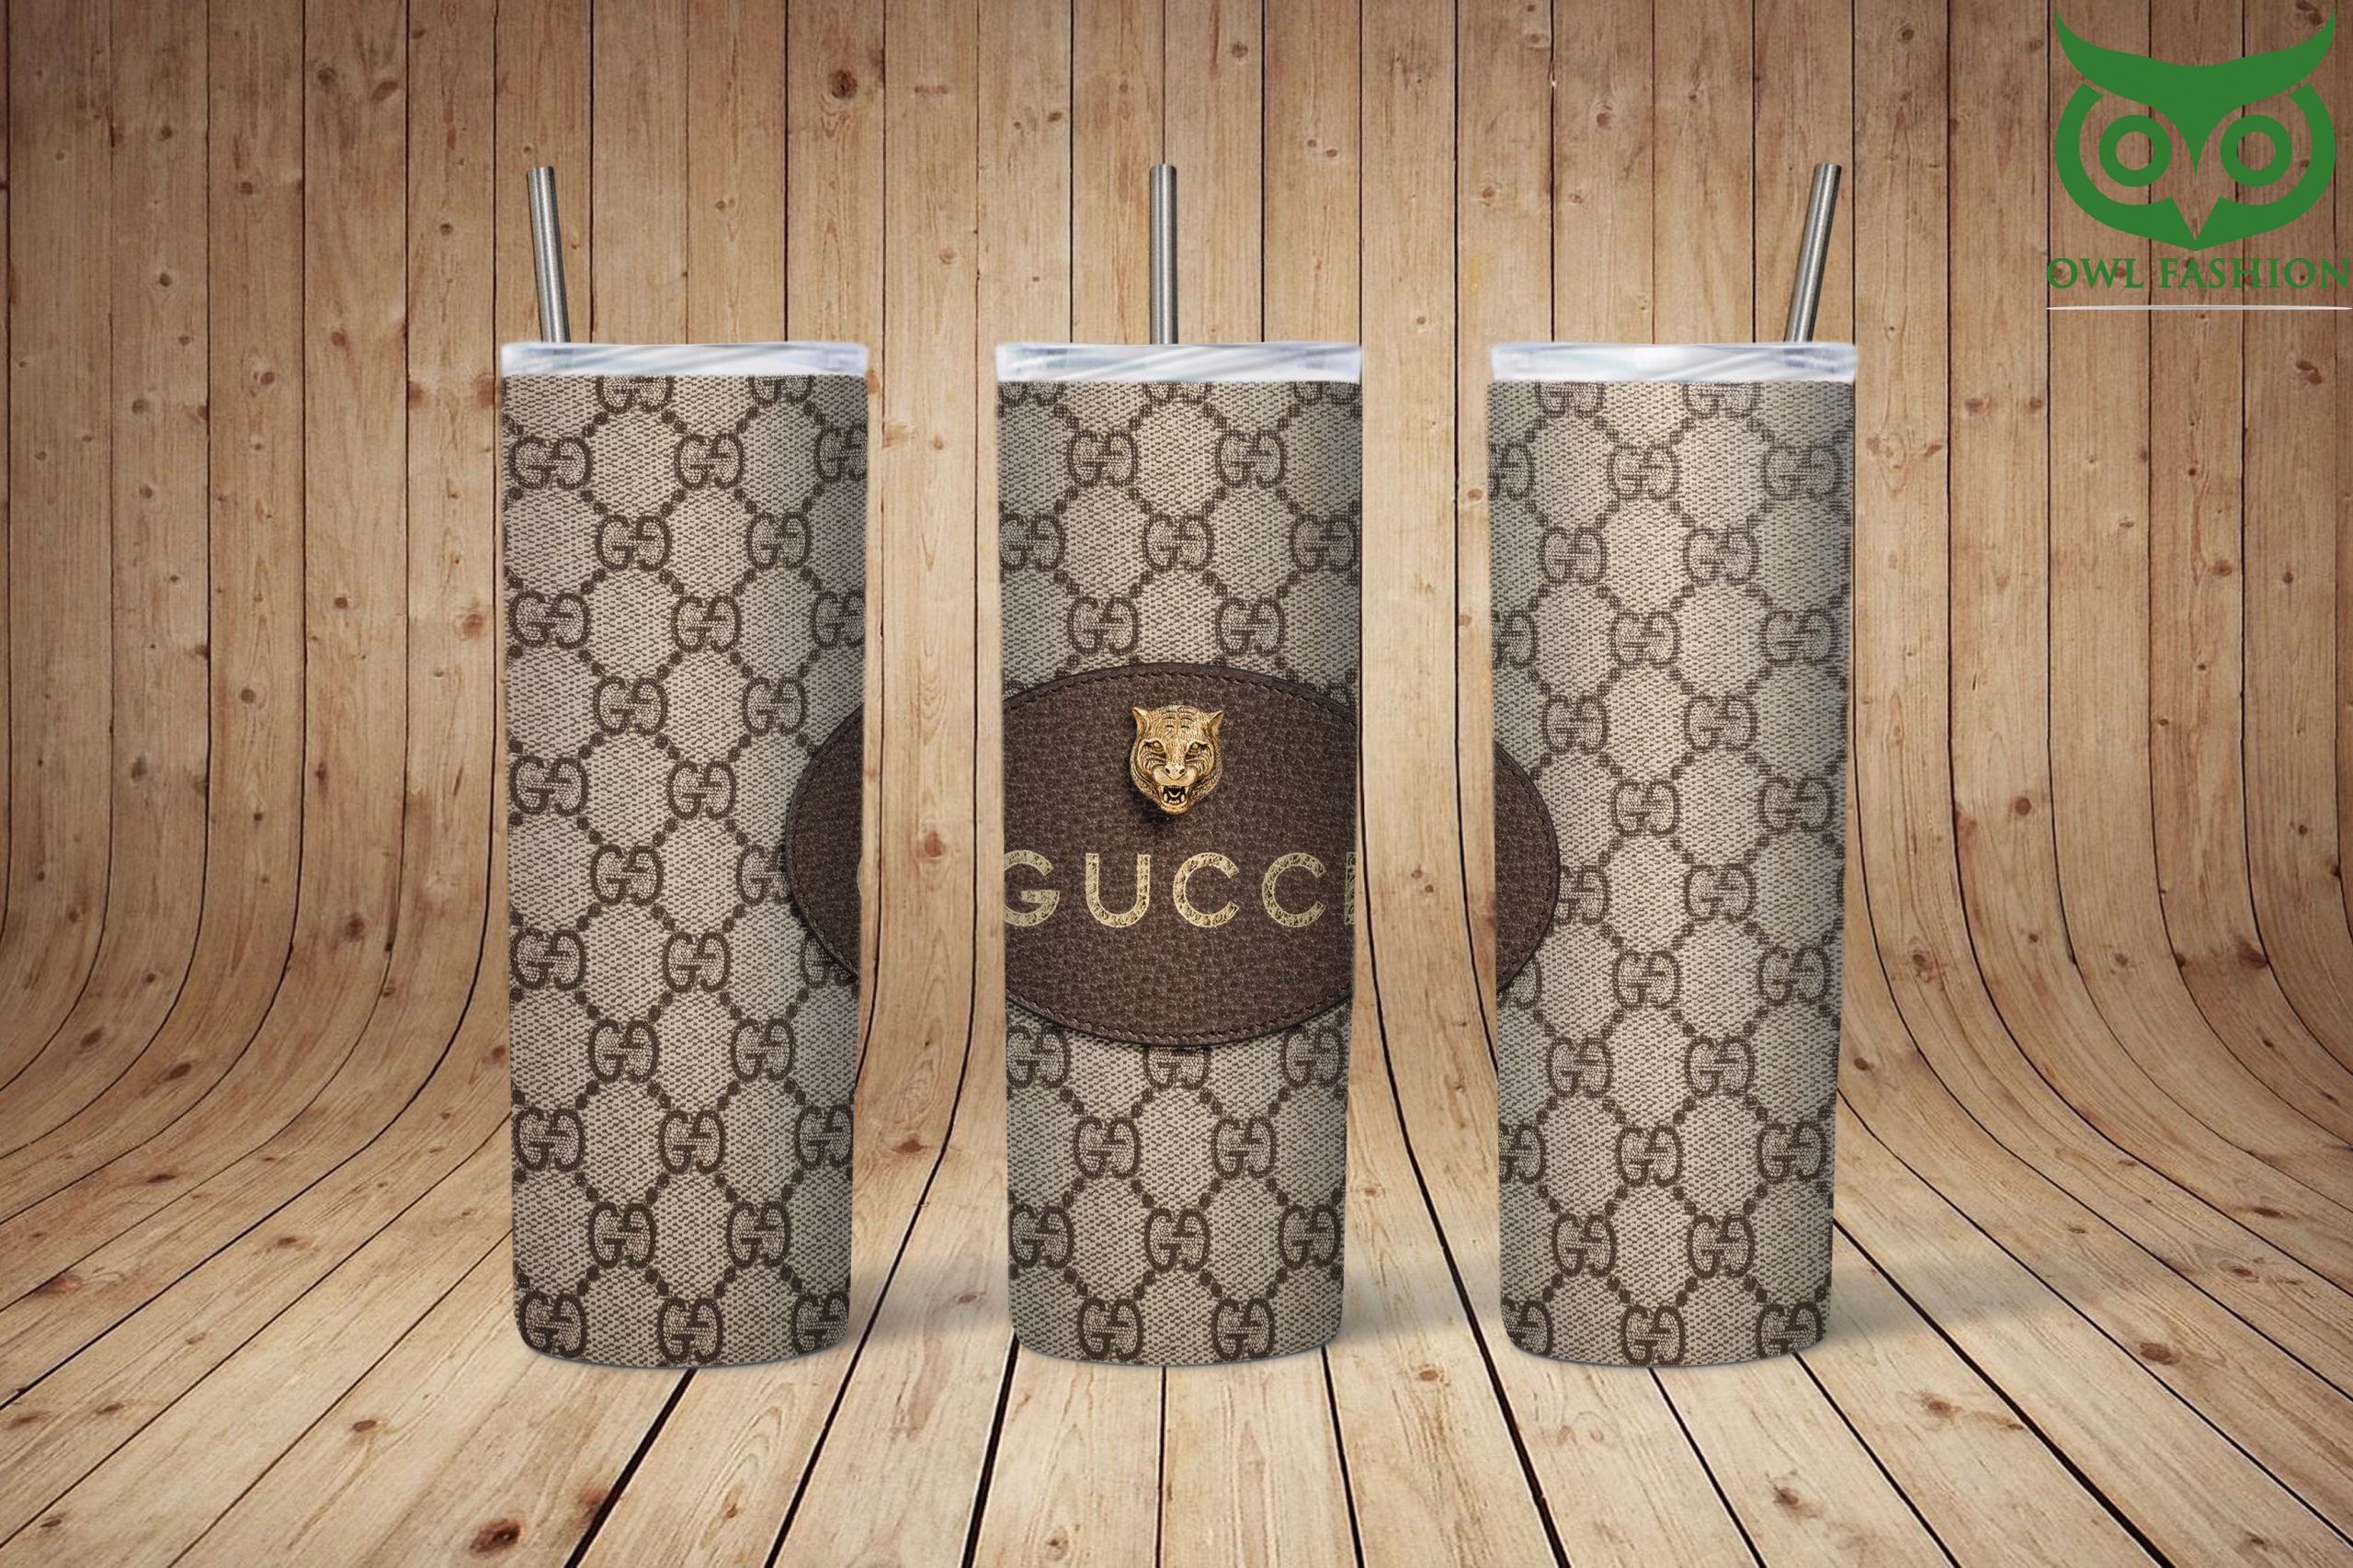 Gucci fashion golden tiger logo skinny tumbler cup 